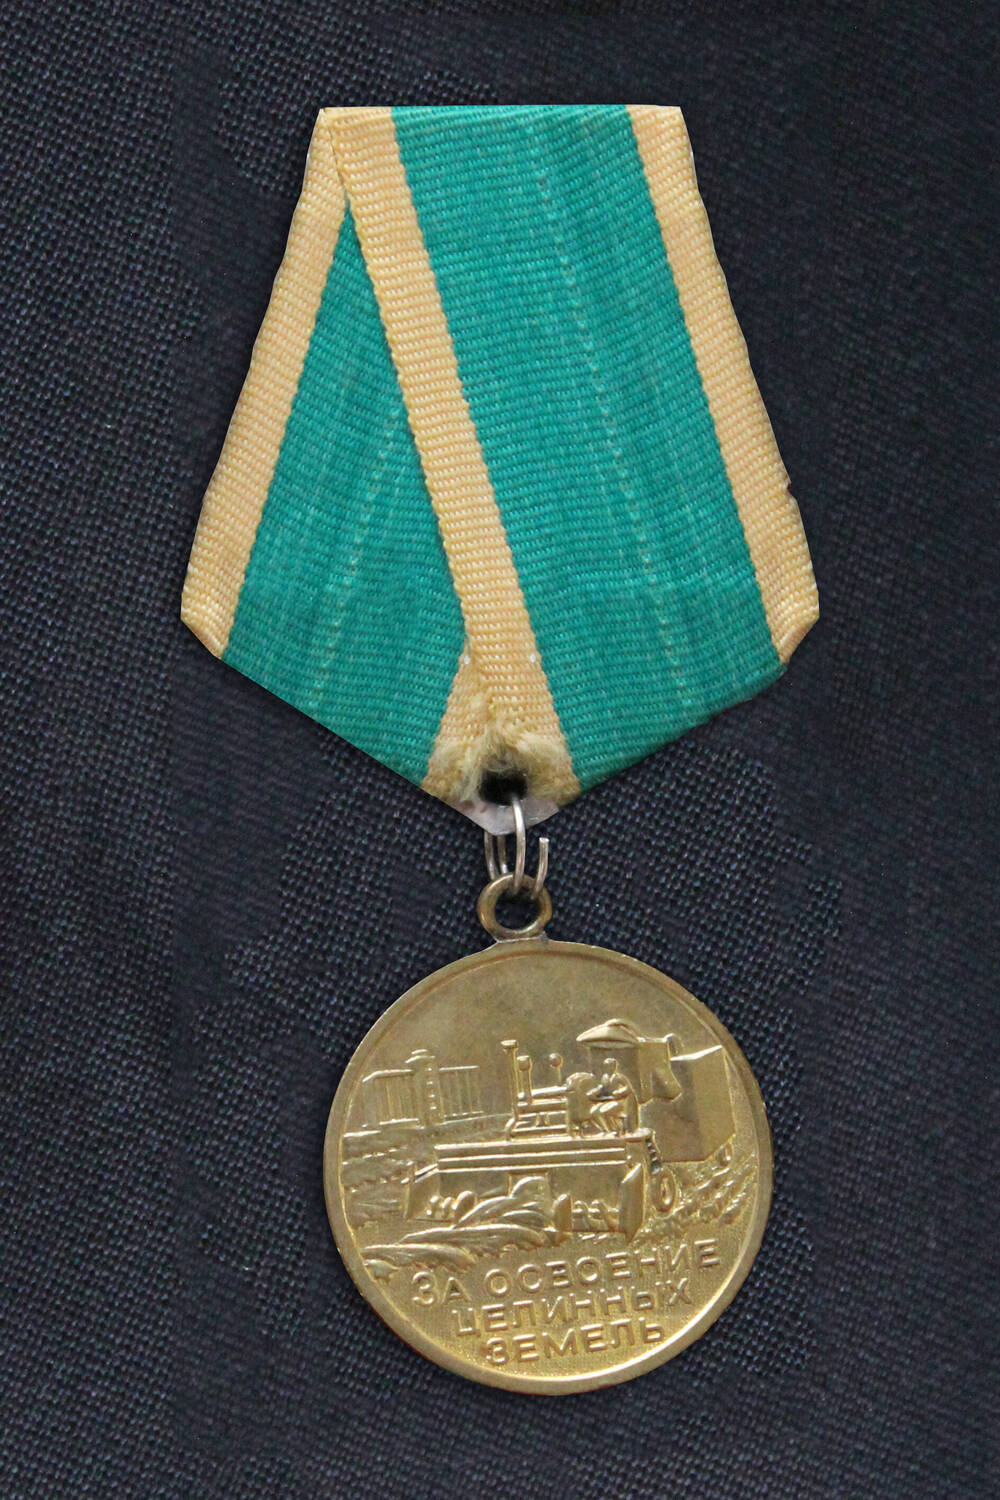 Медаль «За освоение целинных земель» Музыкаева Х. А.